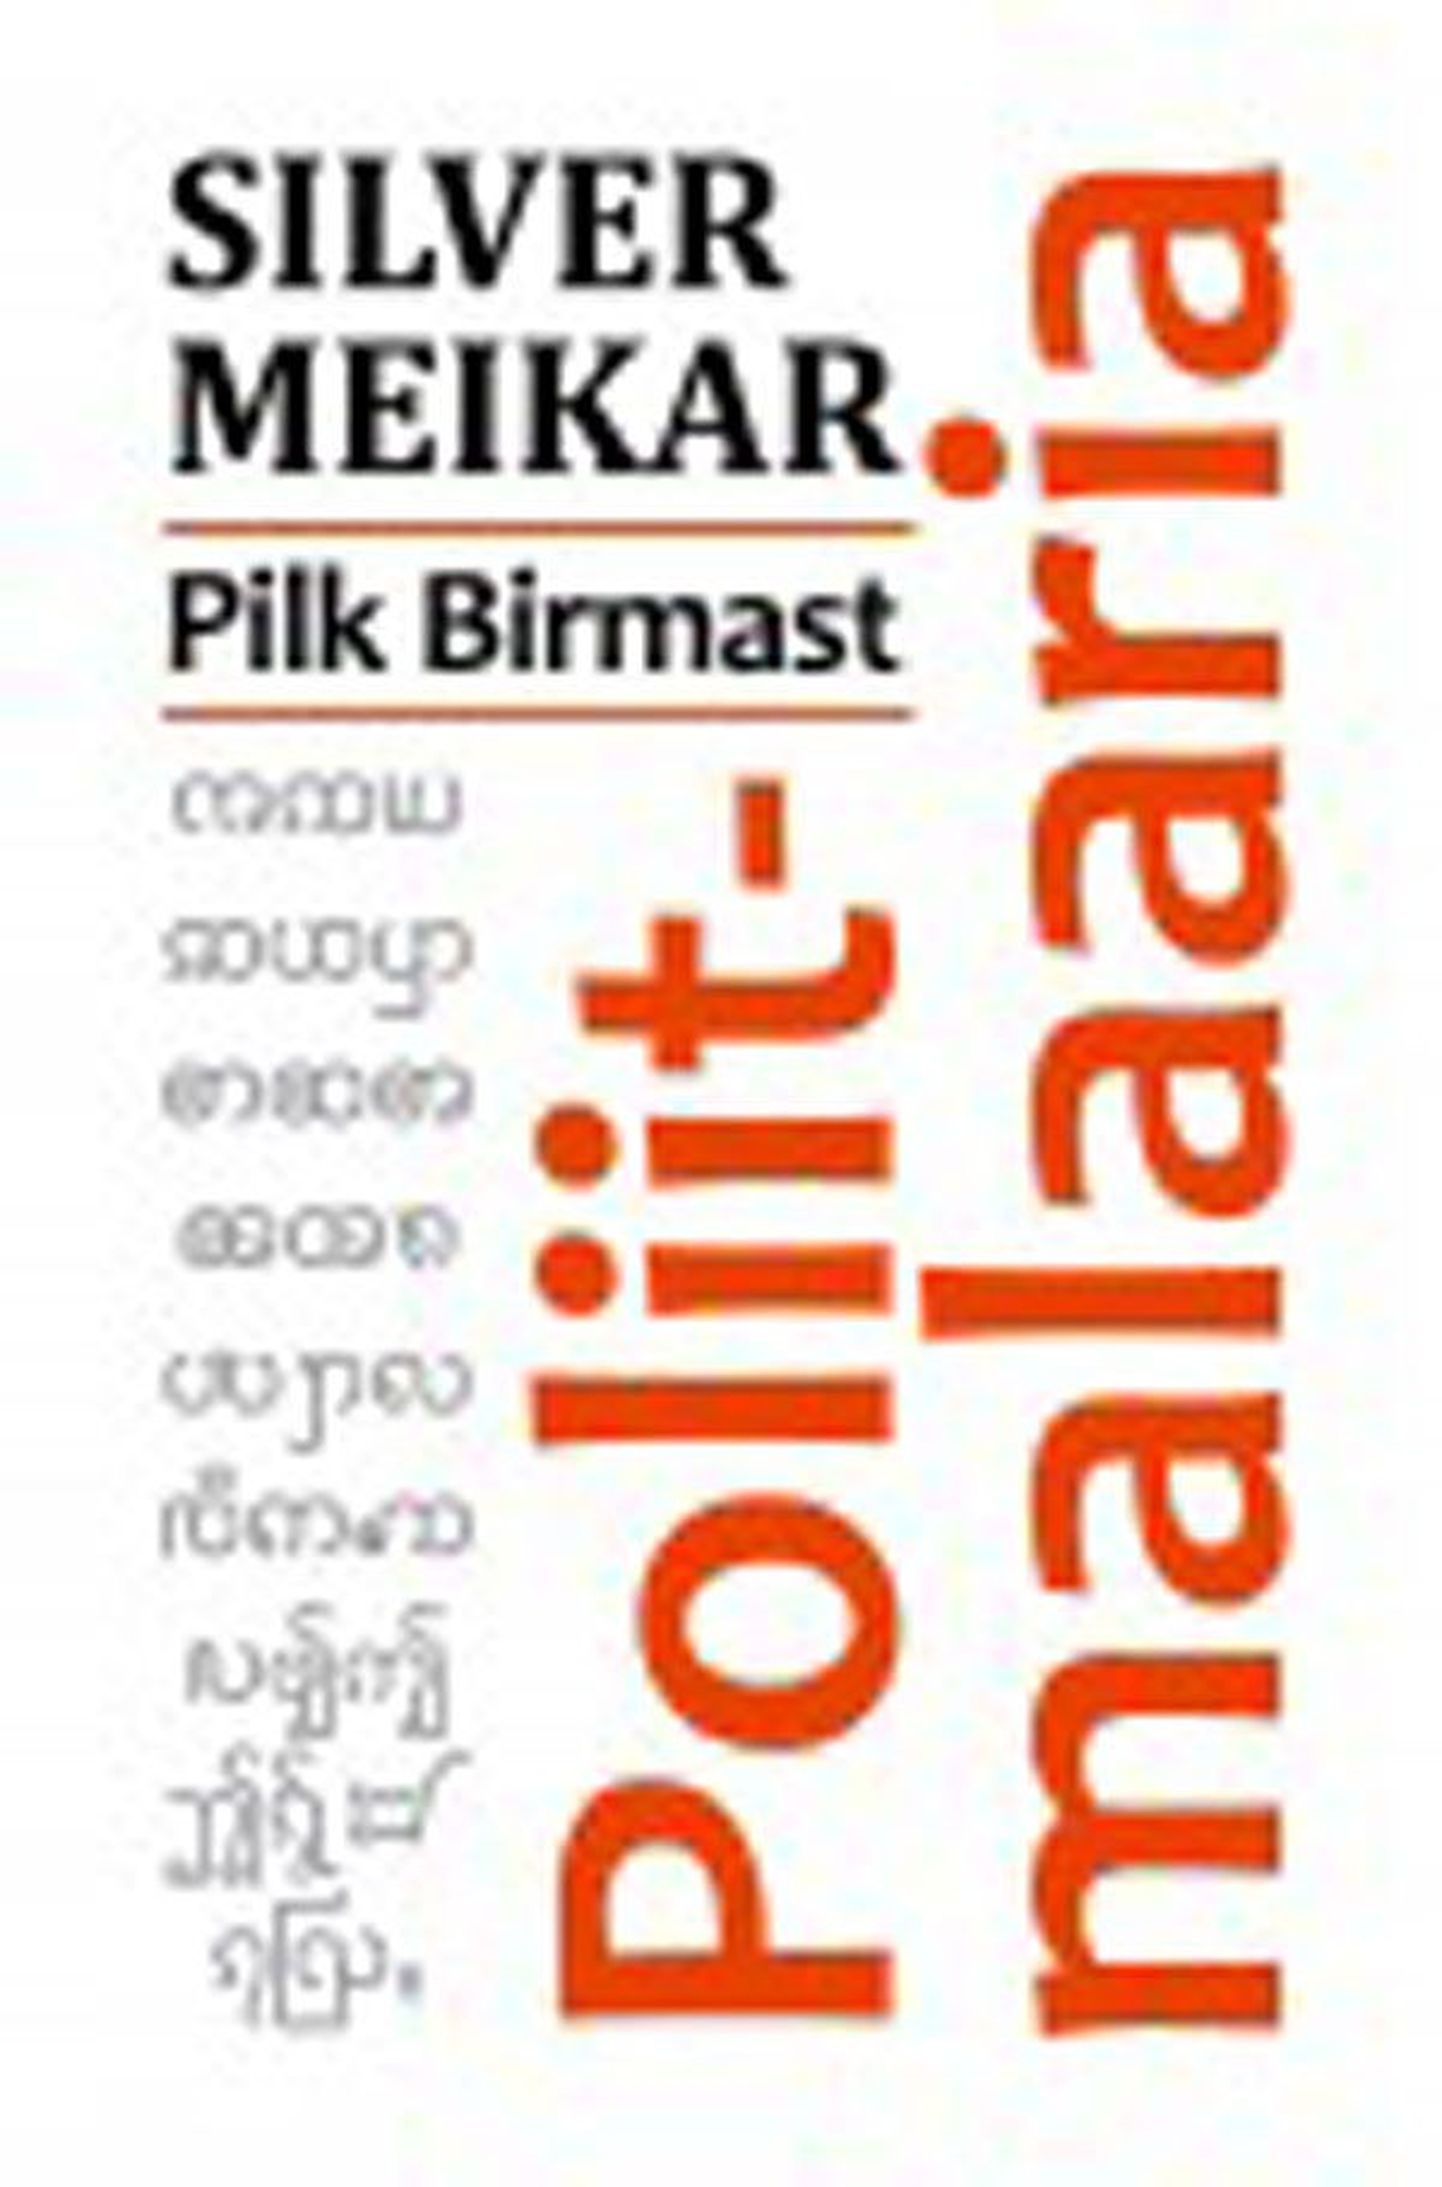 Raamat
Silver Meikar 
«Poliitmalaaria. 
Pilk Birmast»
Tallinn, 2013